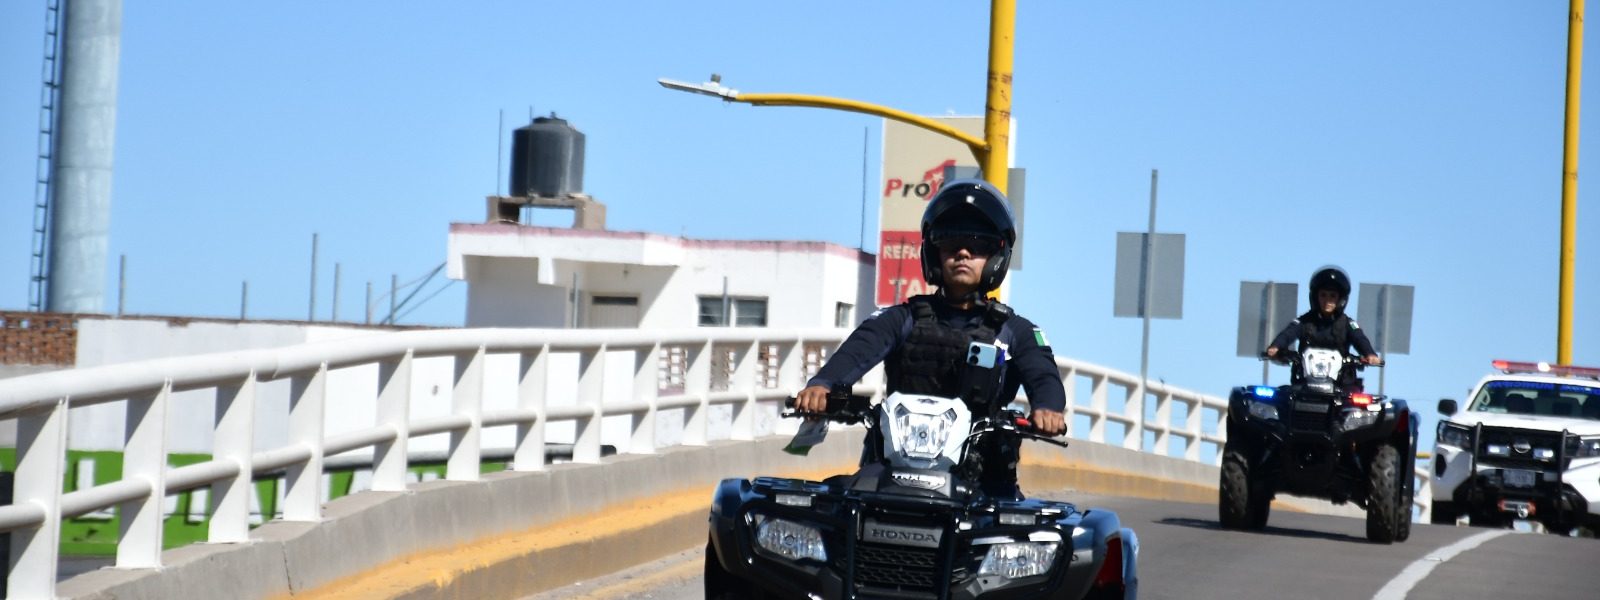 LISTO OPERATIVO DE POLICÍA MUNICIPAL «JORNADA ELECTORAL SEGURA»